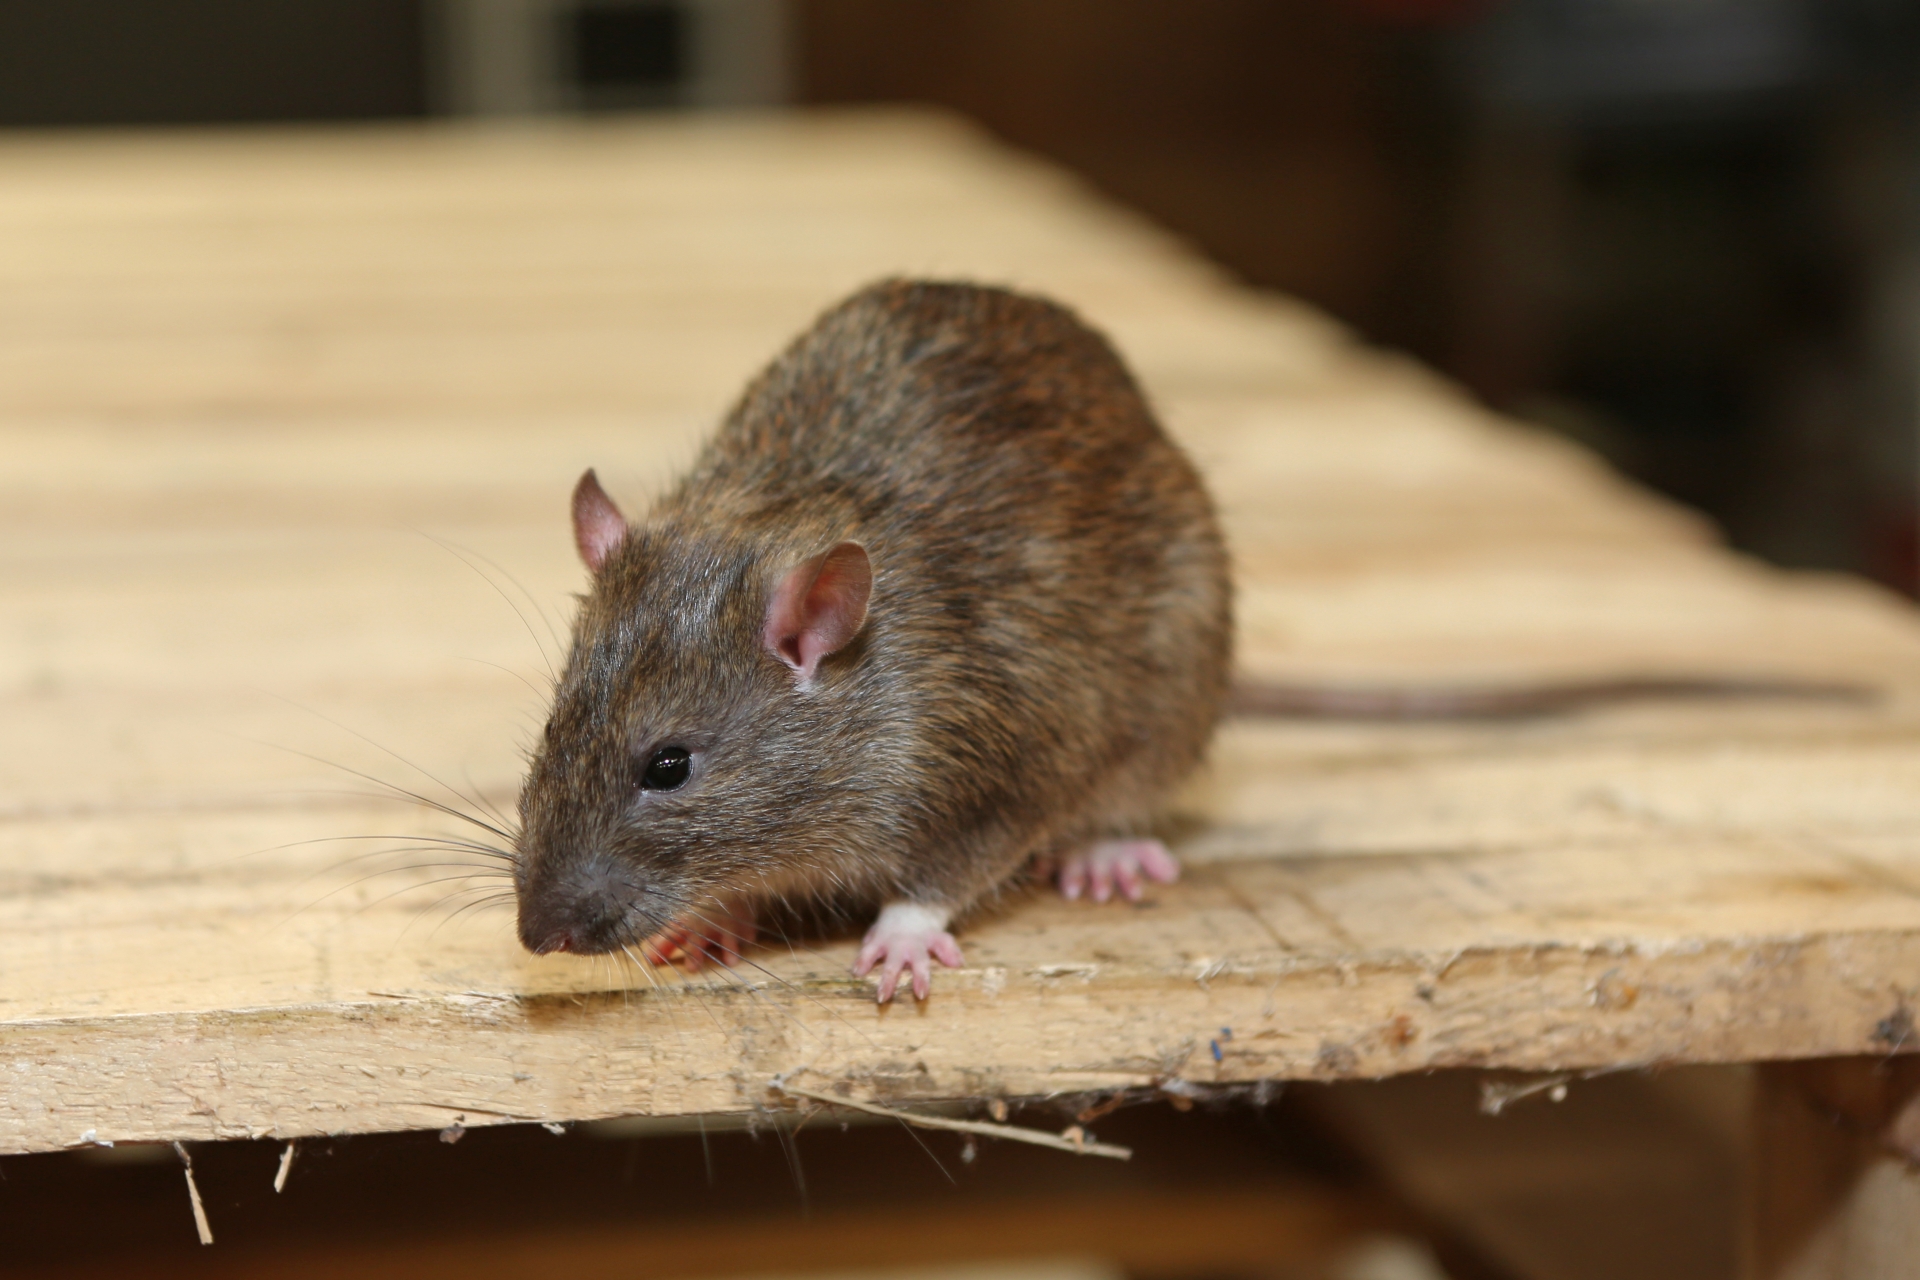 Rat extermination, Pest Control in West Kensington, W14. Call Now 020 8166 9746